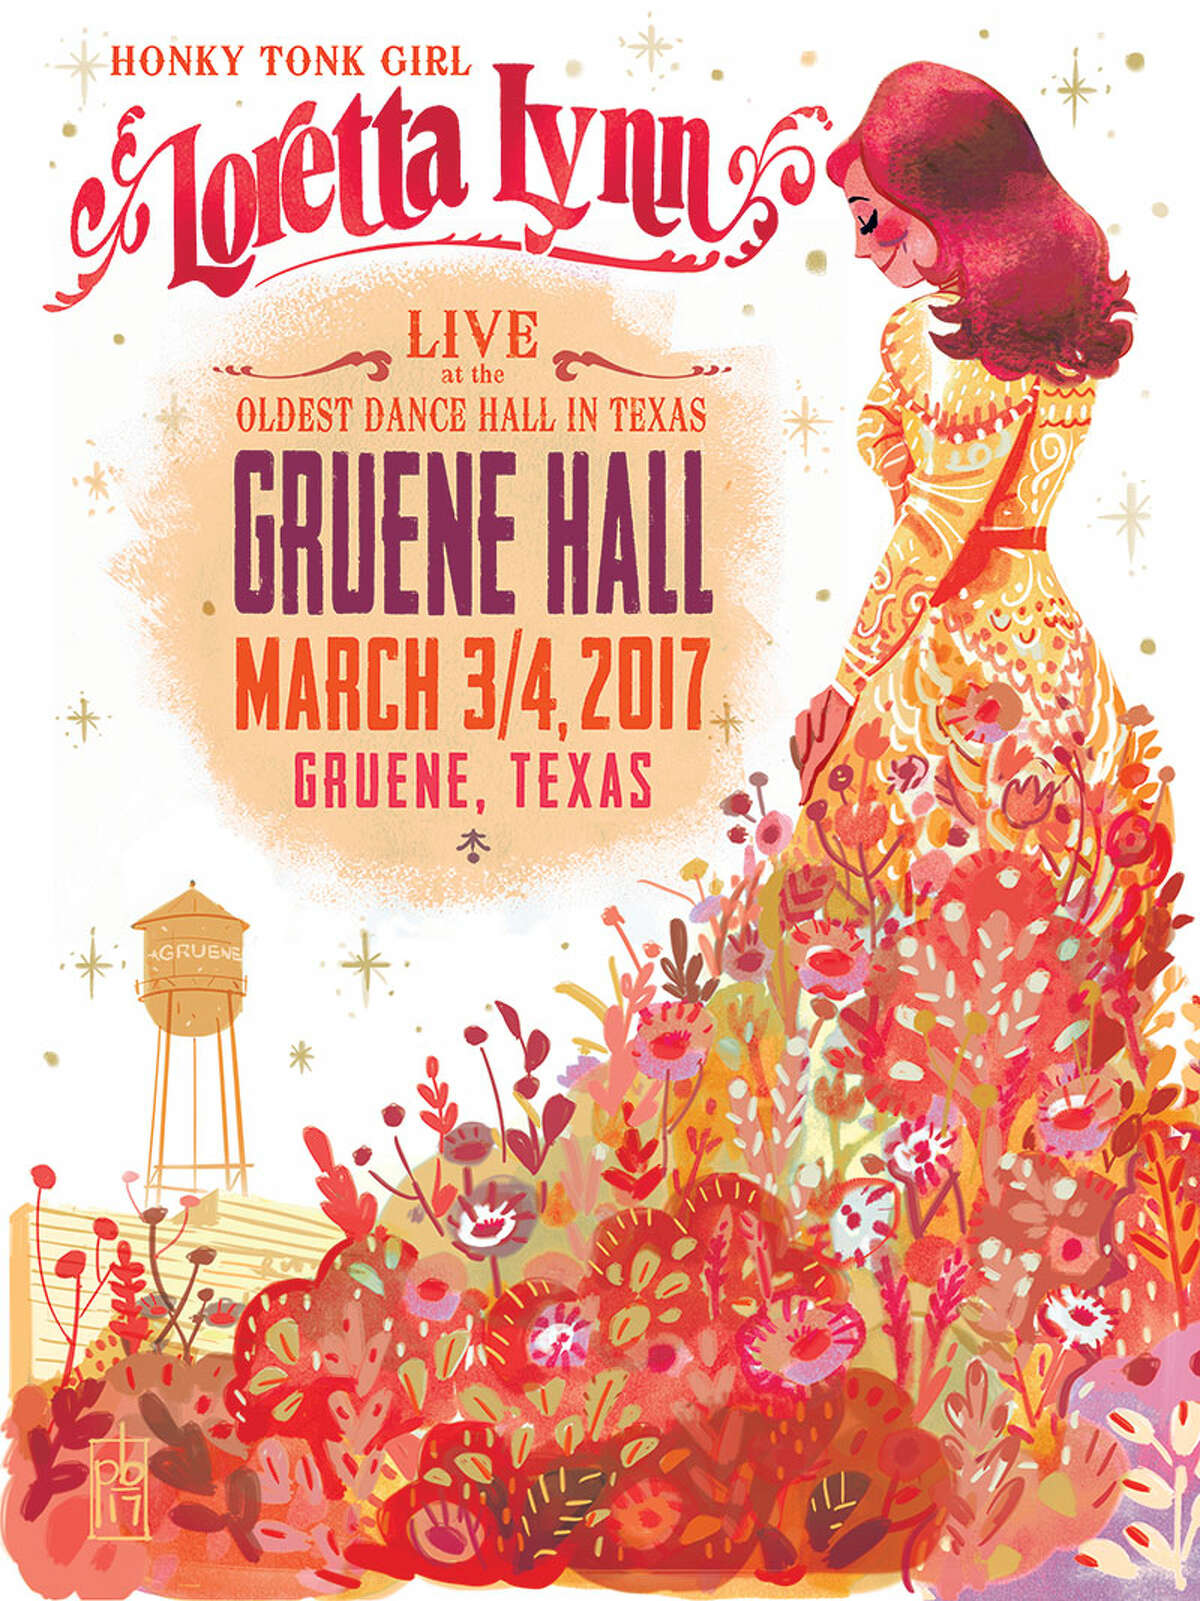 Disney artist Paul Briggs' poster for Loretta Lynn's Gruene Hall concerts.